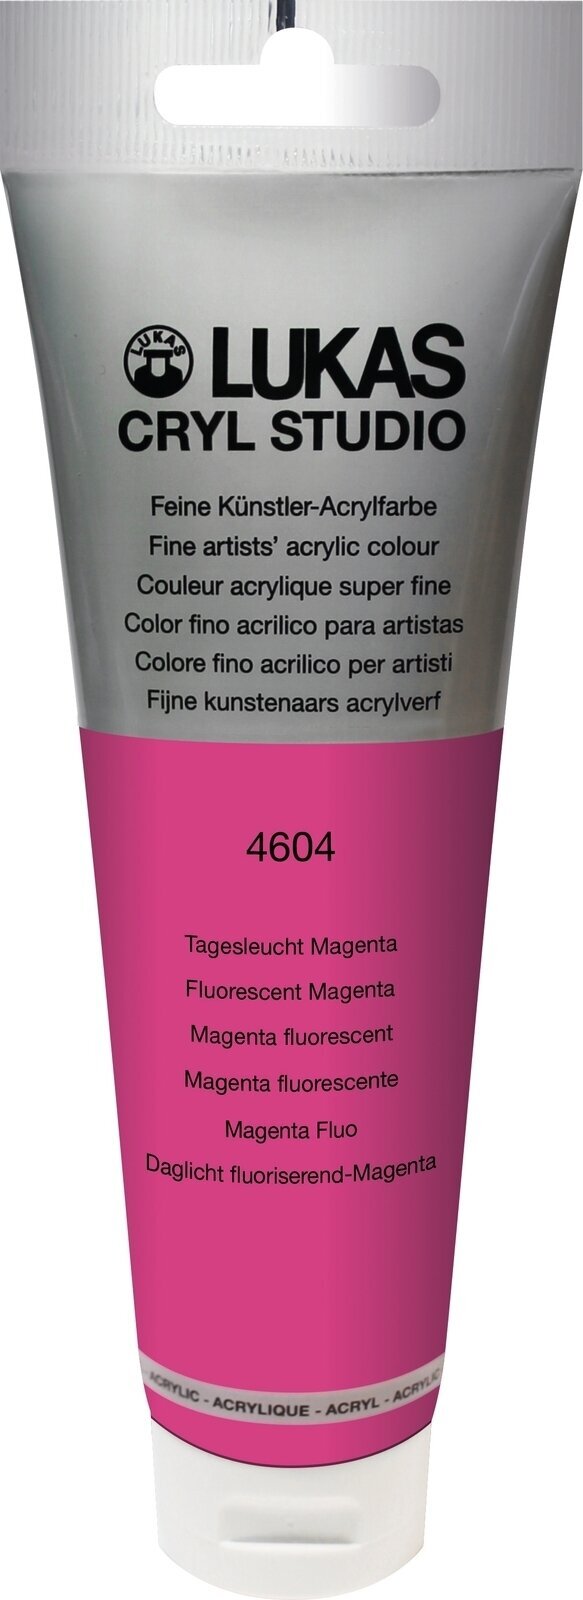 Acrylverf Lukas Cryl Studio Acrylic Paint Plastic Tube Acrylverf Fluorescent Magenta 125 ml 1 stuk